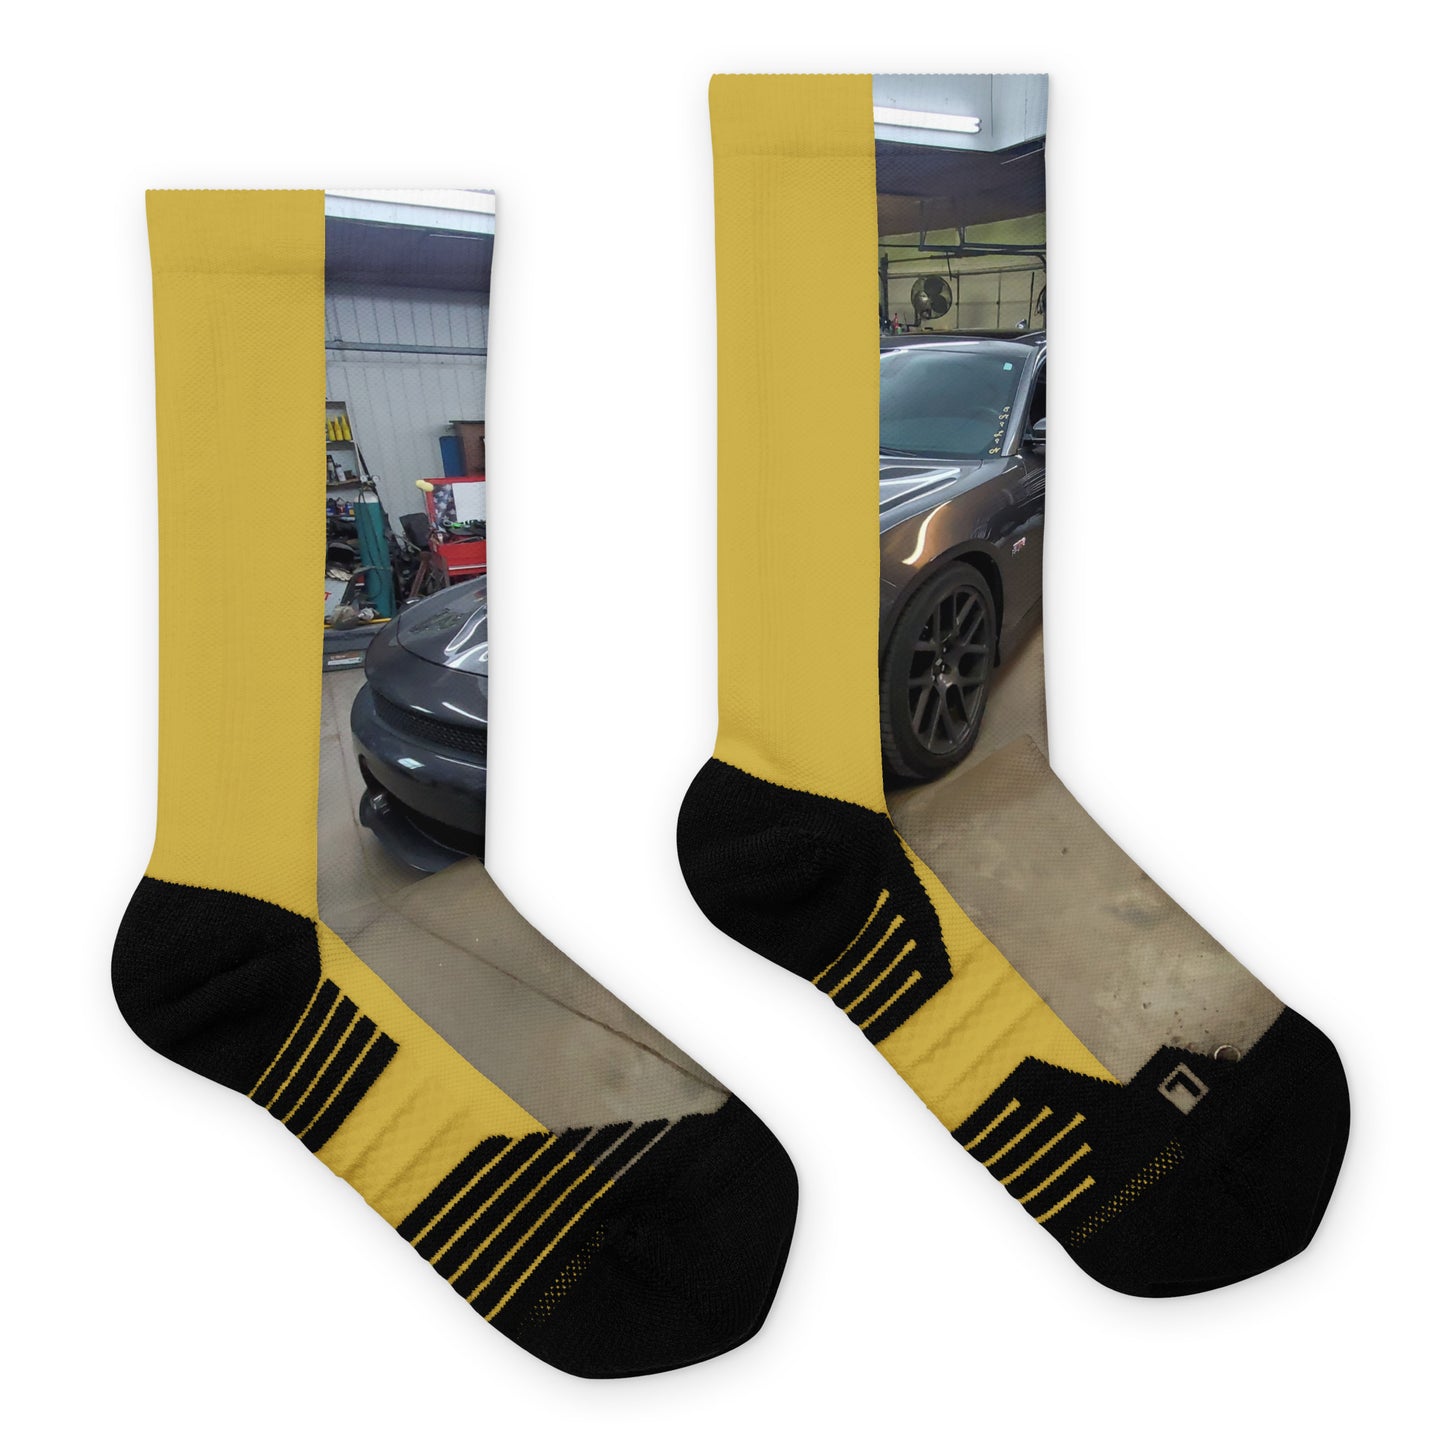 Basketball socks